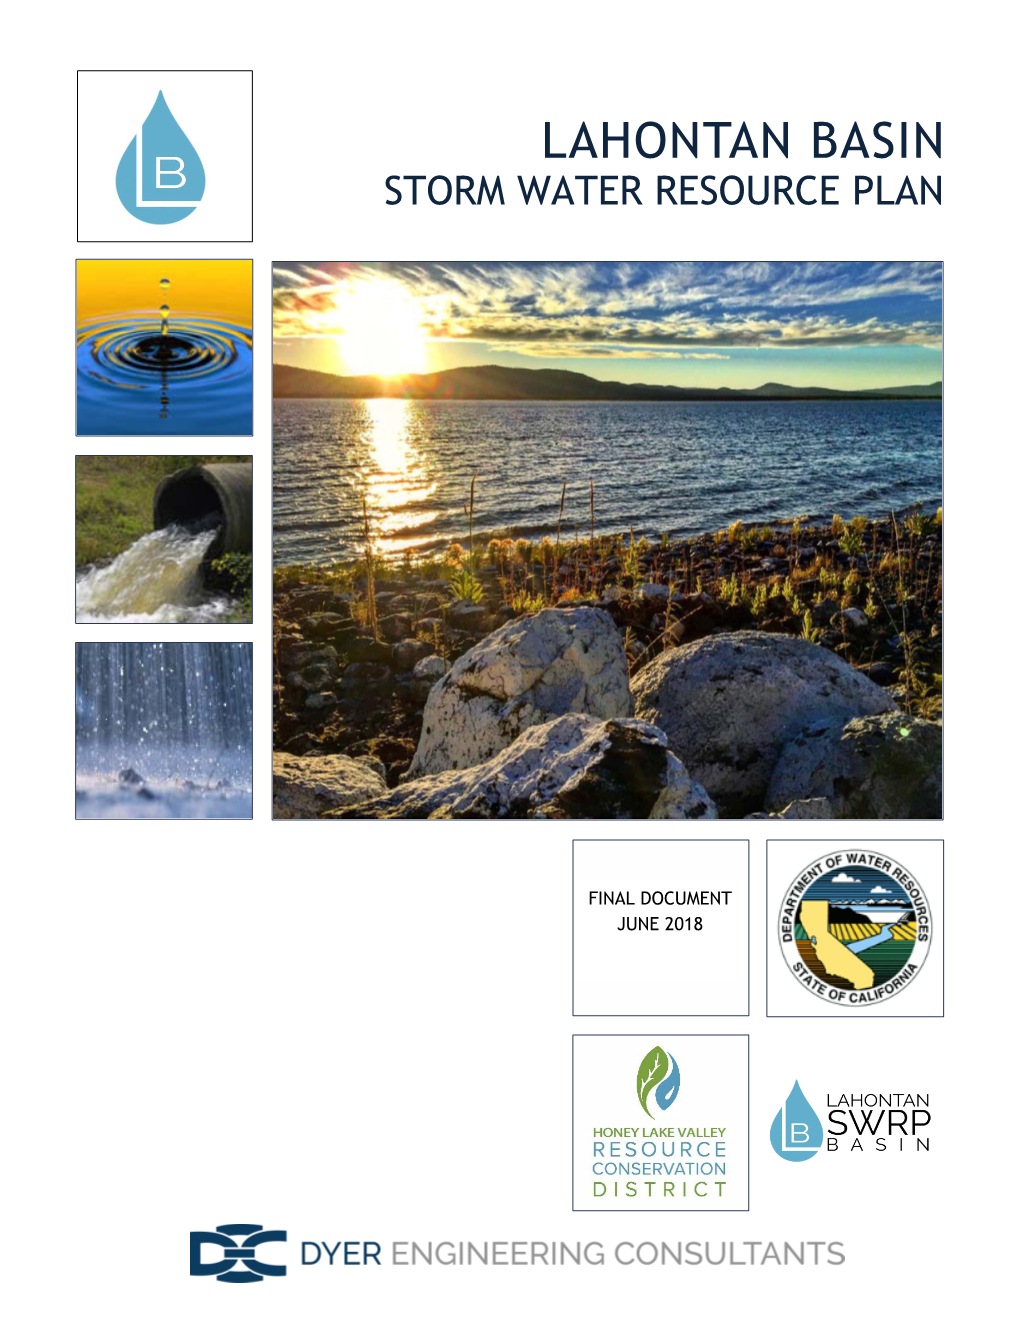 Lahontan Basin Storm Water Resource Plan